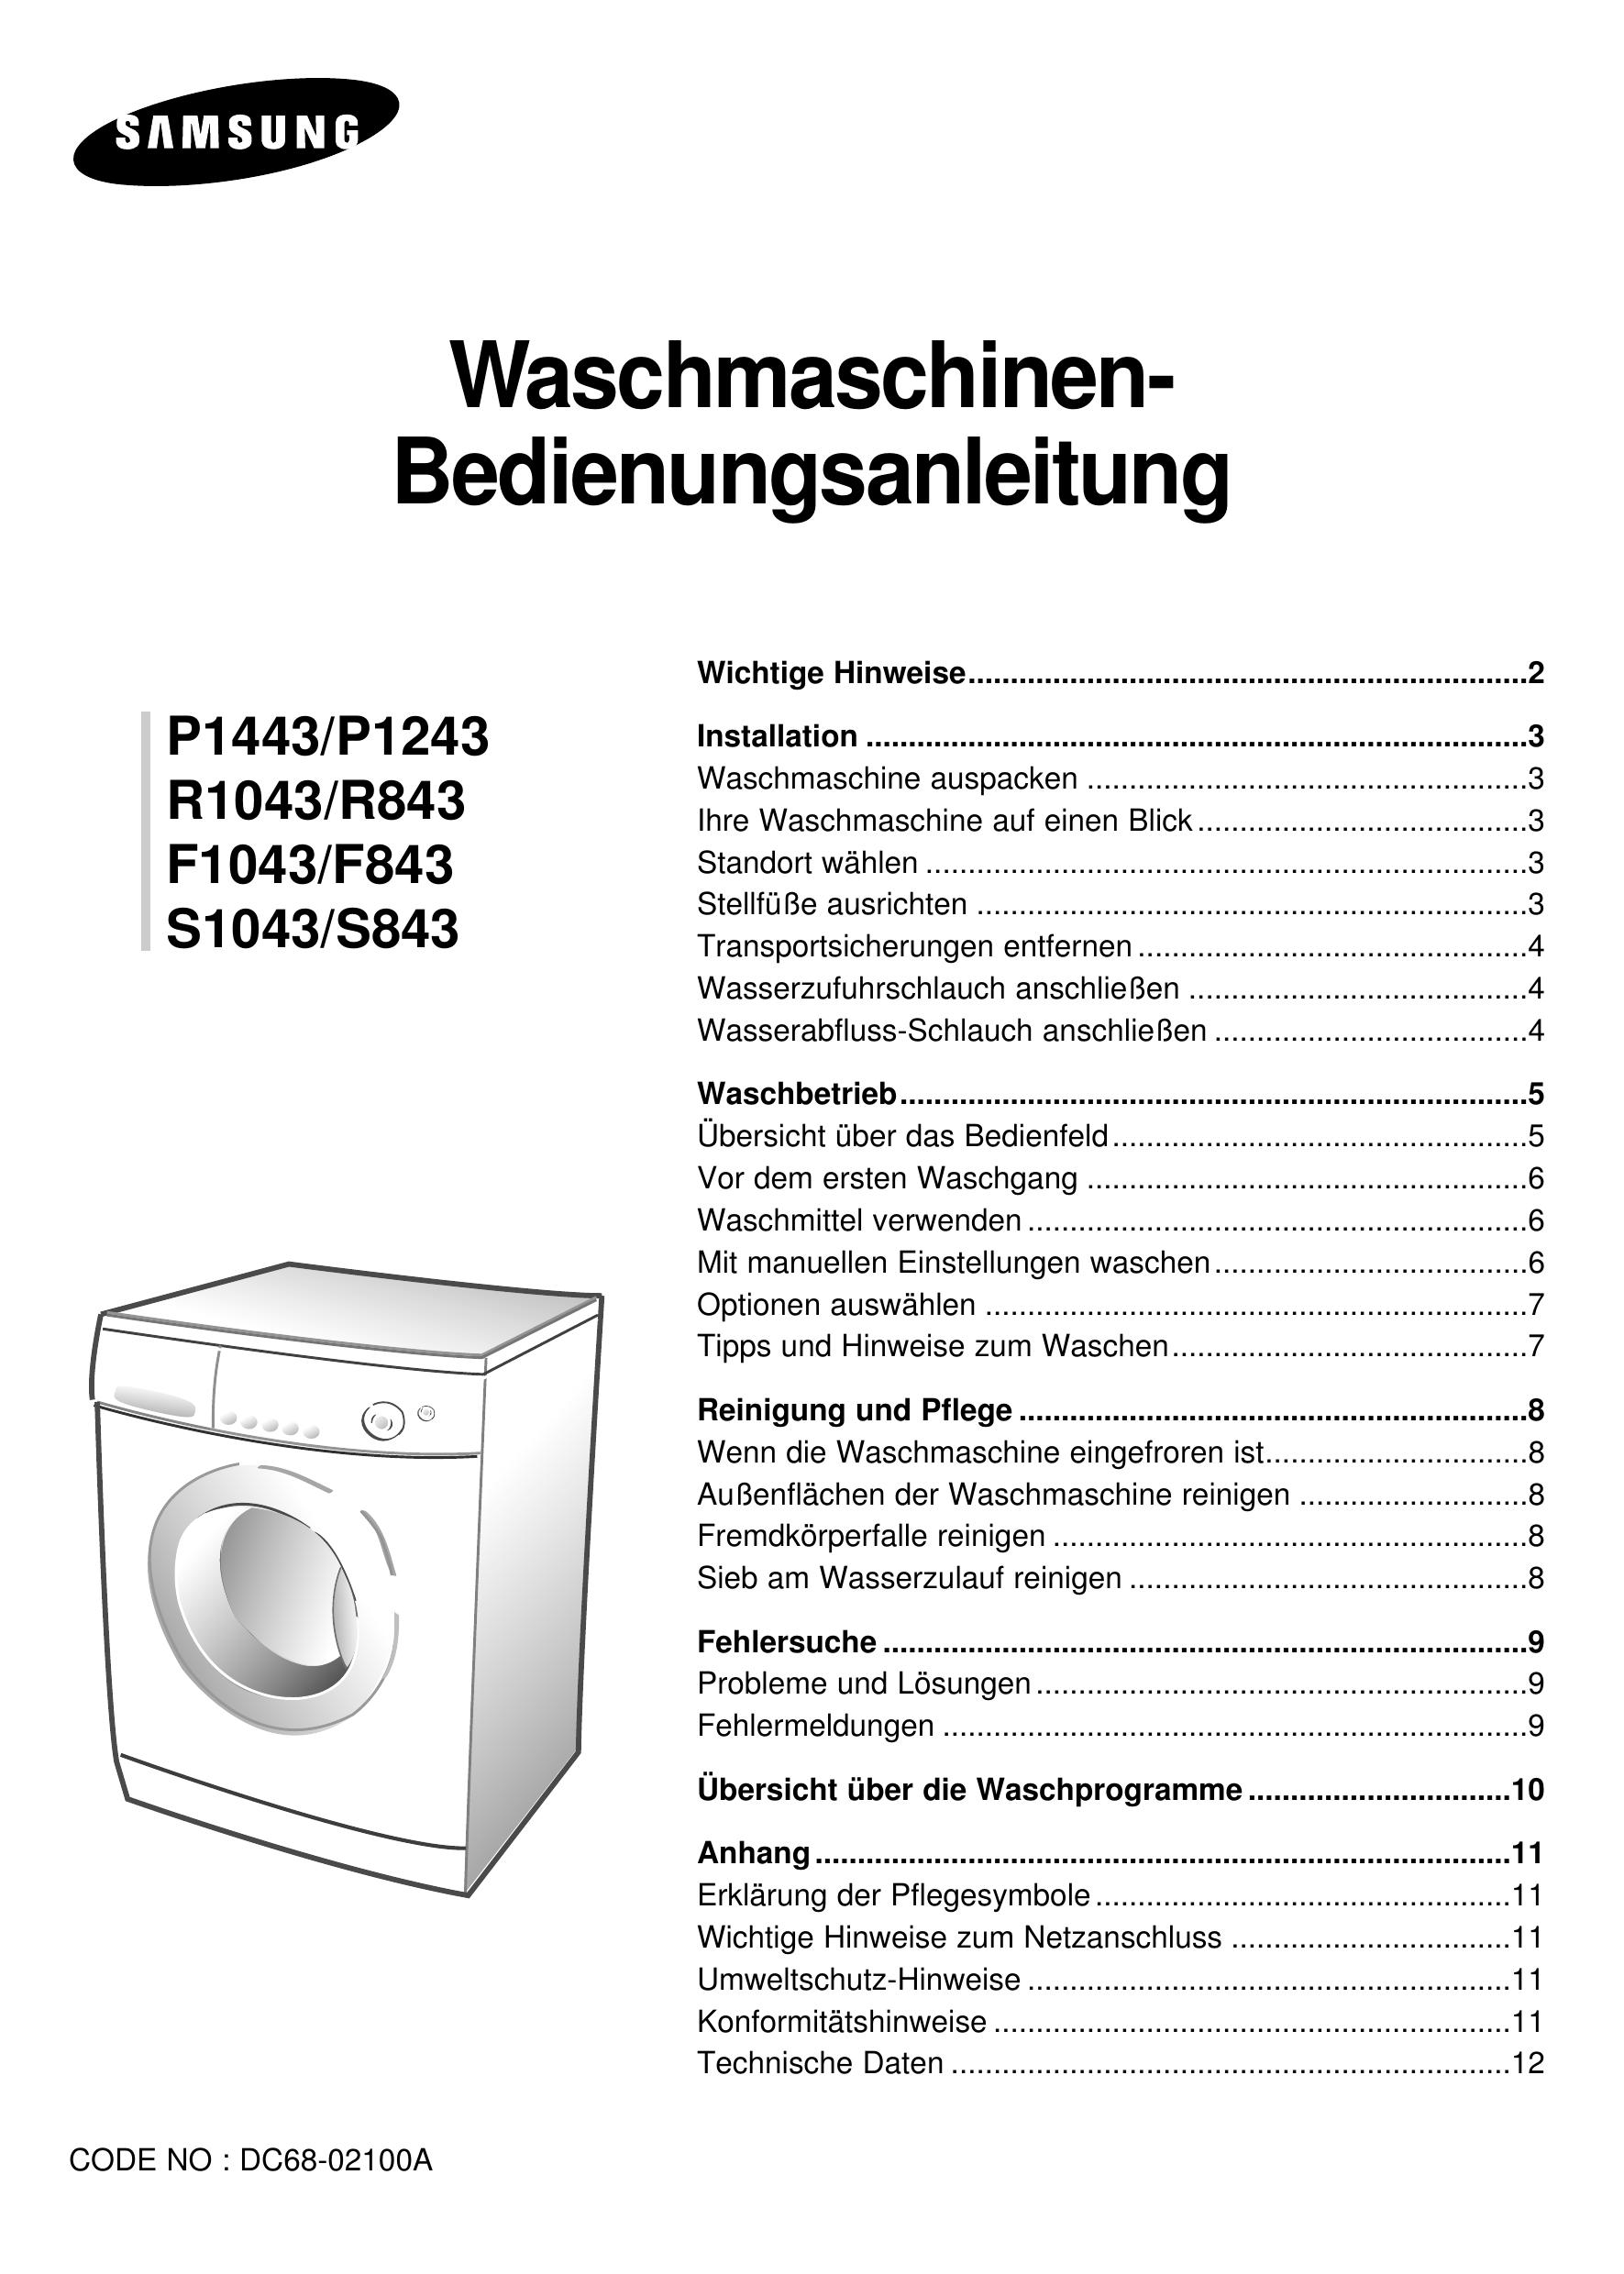 Samsung F843 Washer User Manual